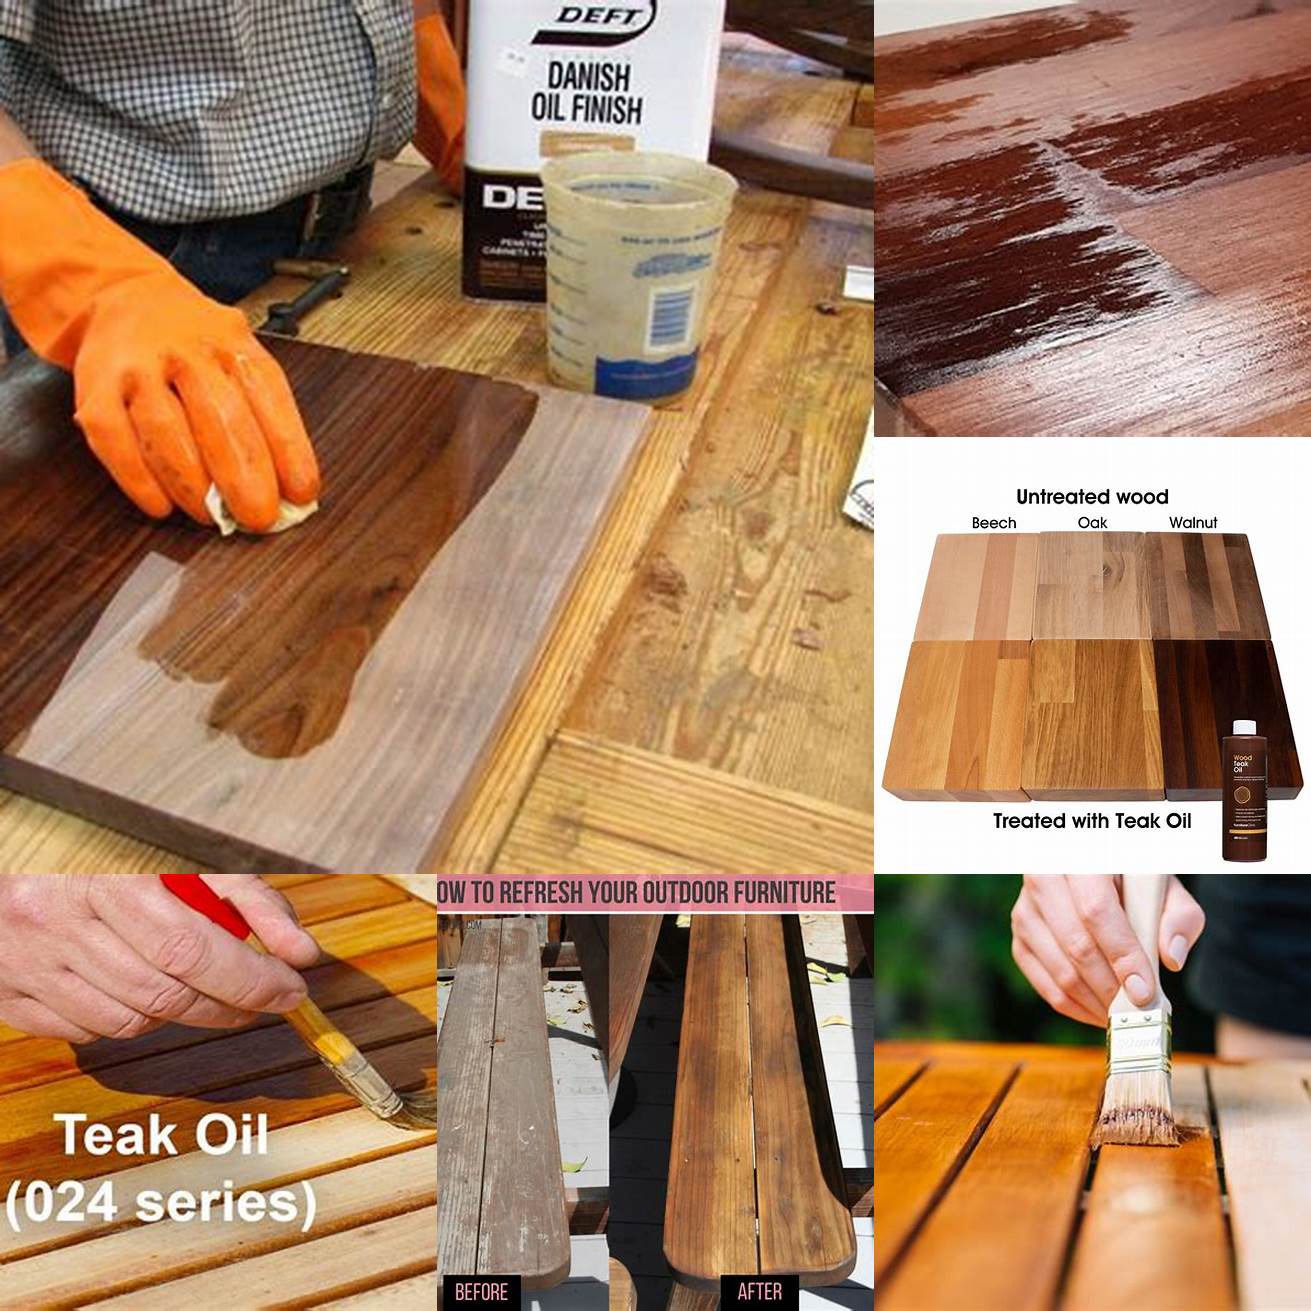 Wood surface after applying teak oil